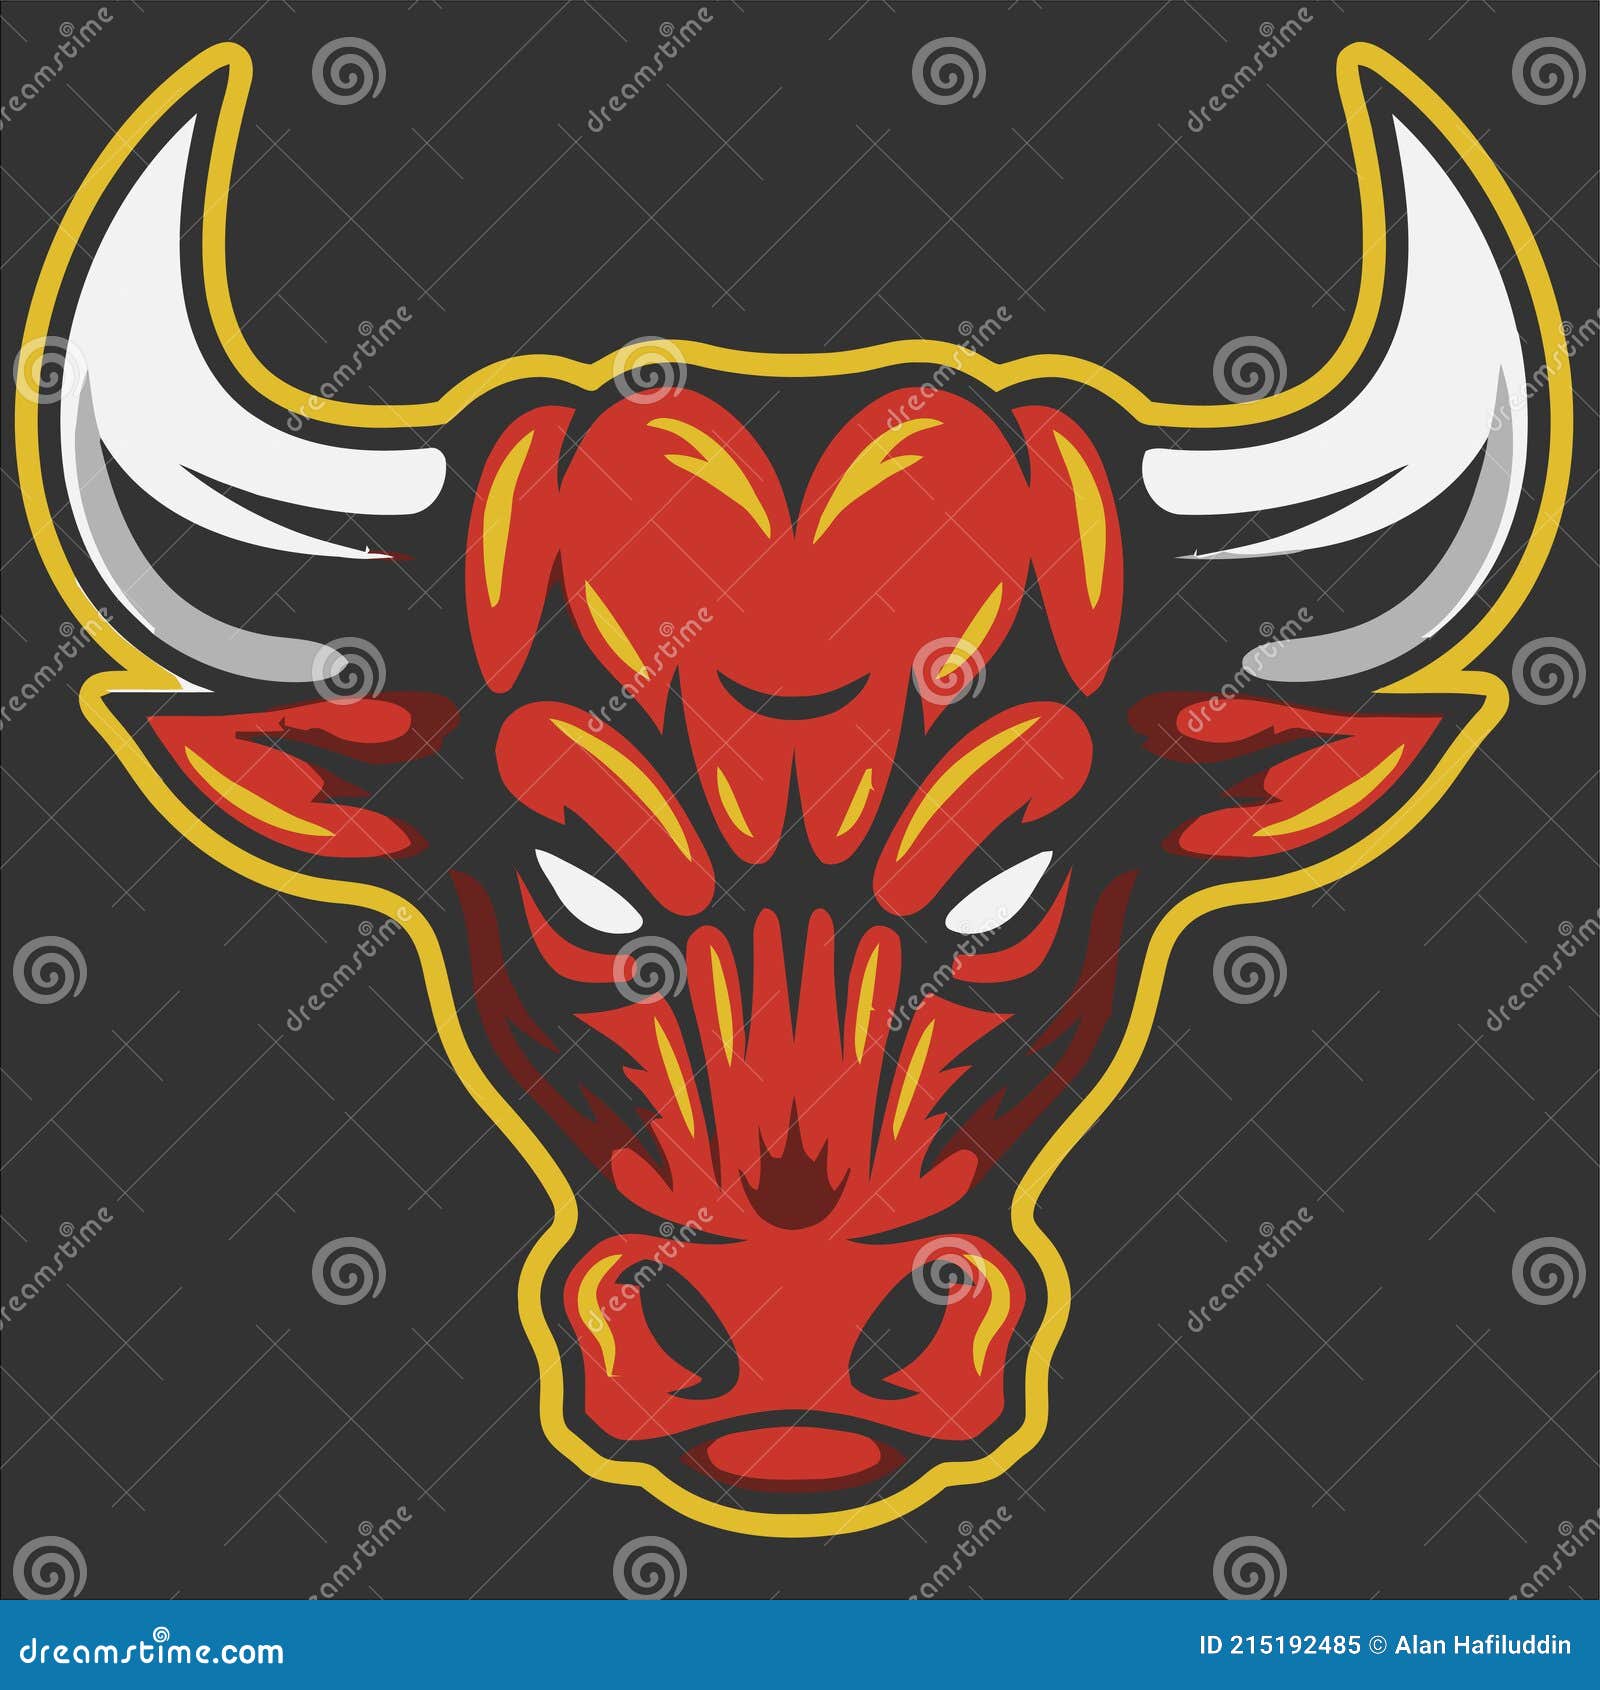 Red Bull S Head Logo Ilustration For Tattoo Stock Vector Illustration Of Beast Farm